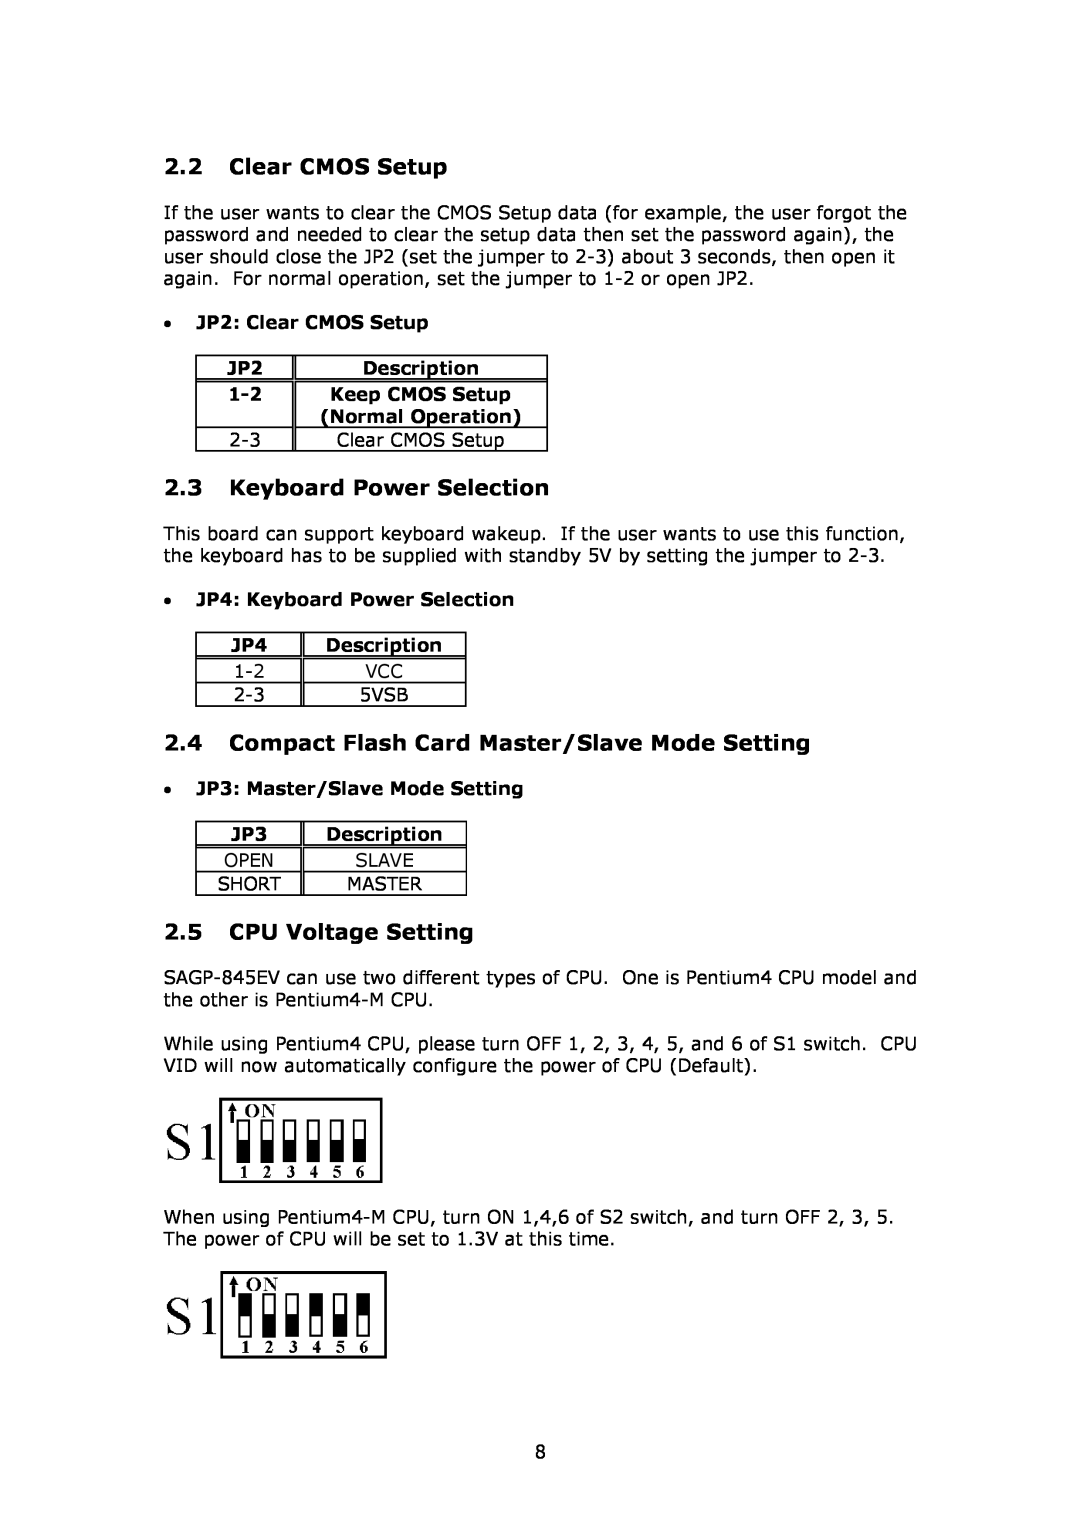 IBM SAGP-845EV Clear CMOS Setup, Keyboard Power Selection, Compact Flash Card Master/Slave Mode Setting, JP2, Description 